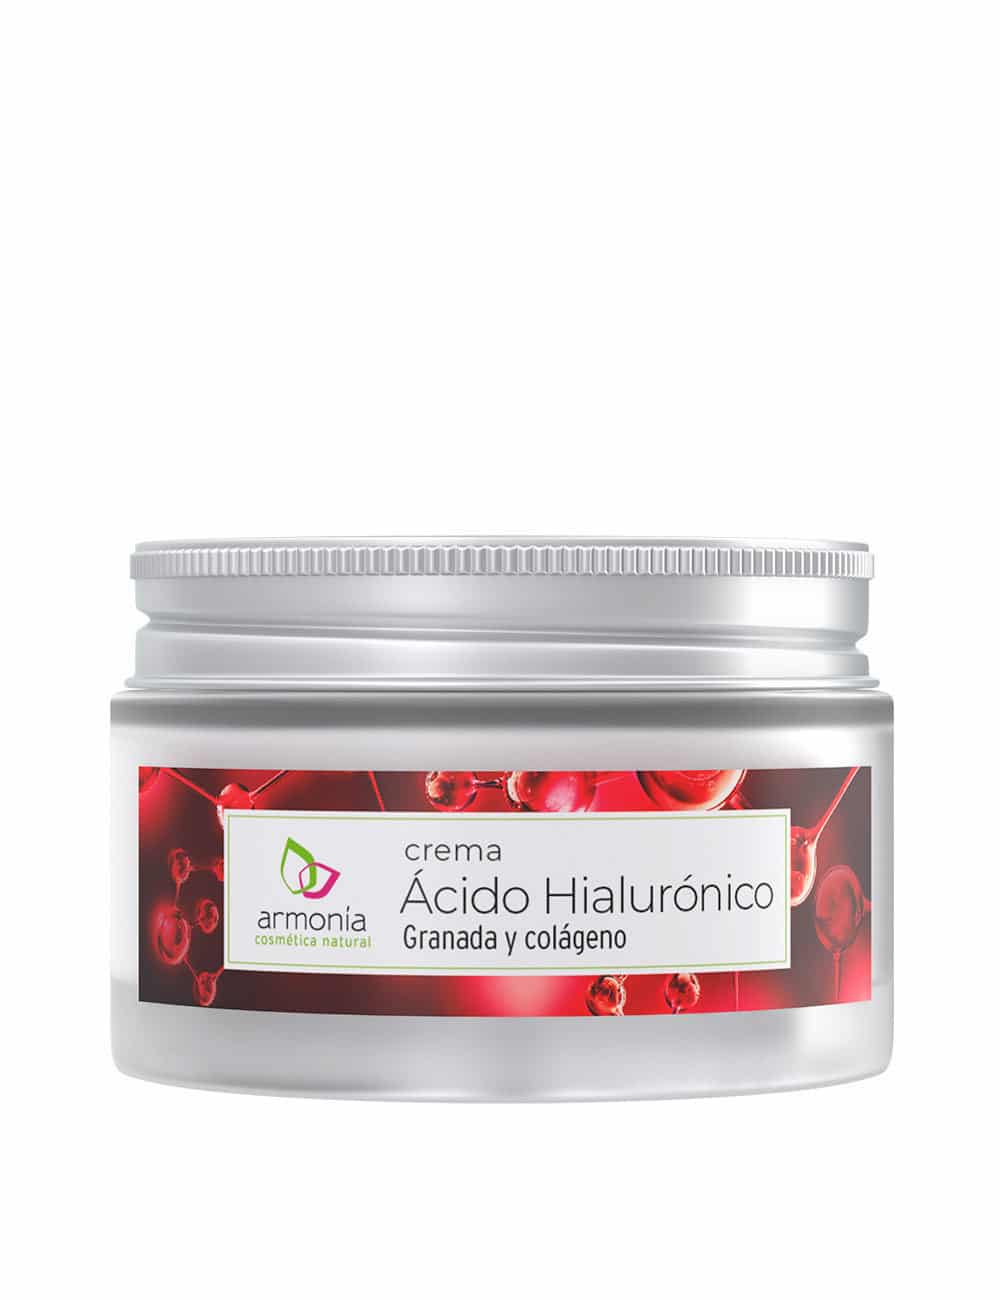 crema acido hialuronico